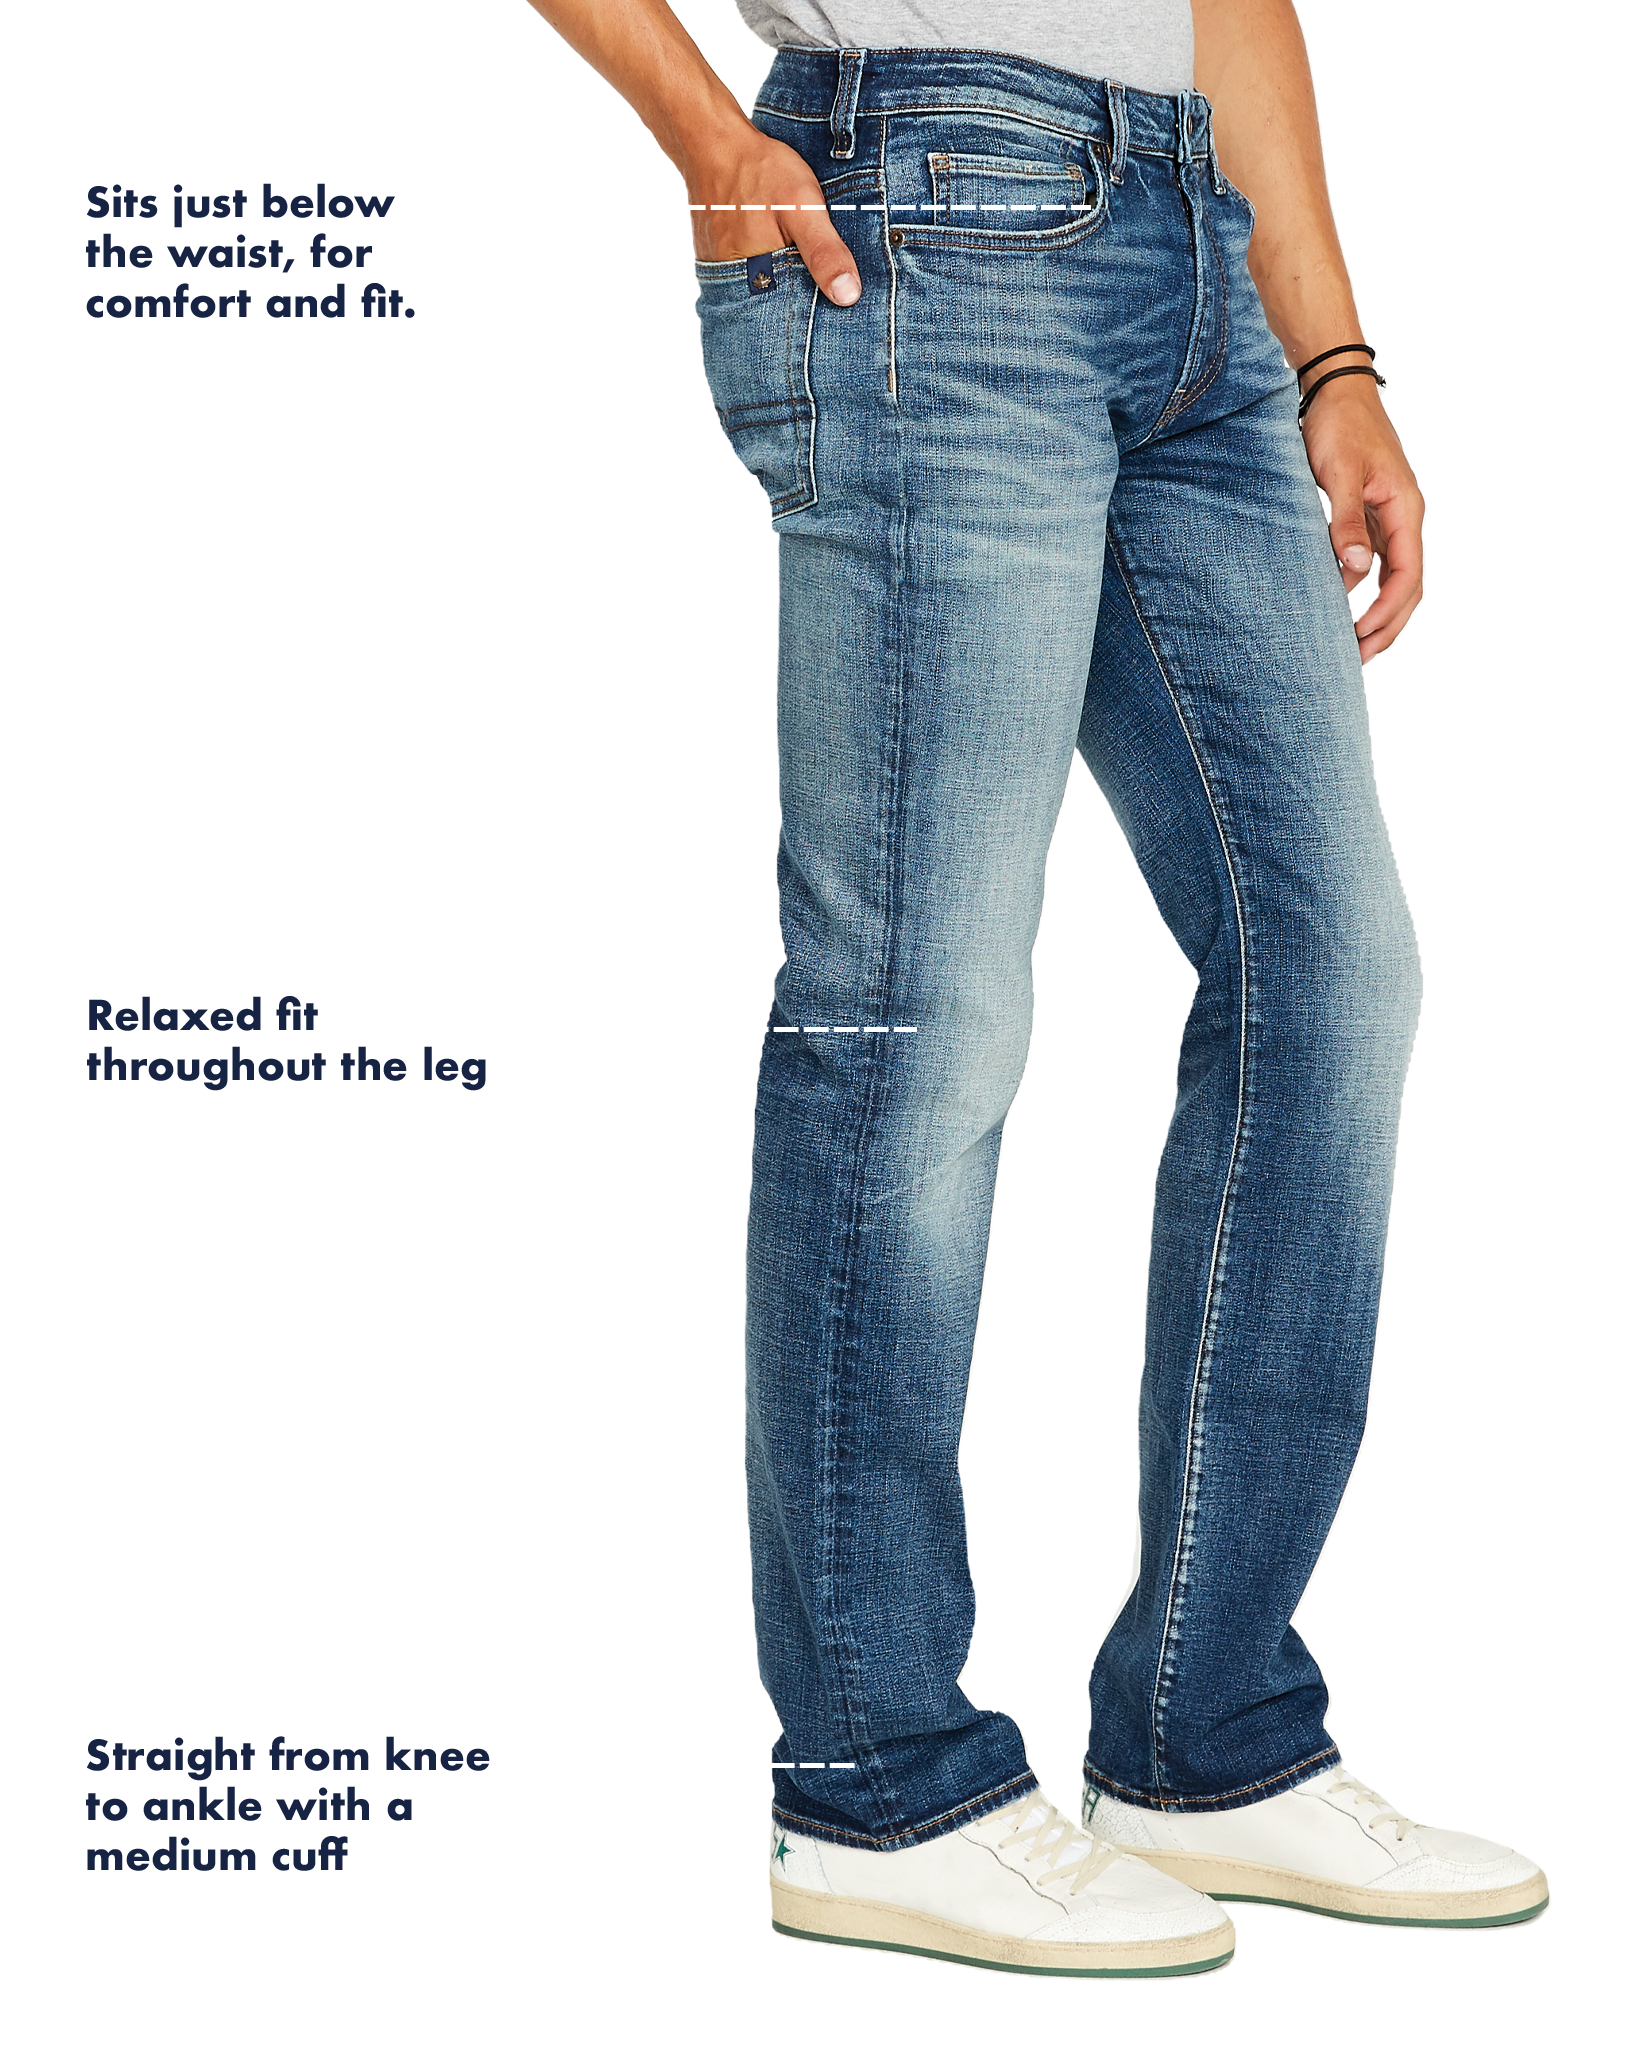 Buffalo David Bitton Mens Evan Slim Fit Stretch Denim Fashion Jean in 30 Inseam Vintage Mid Blue 30 x 32